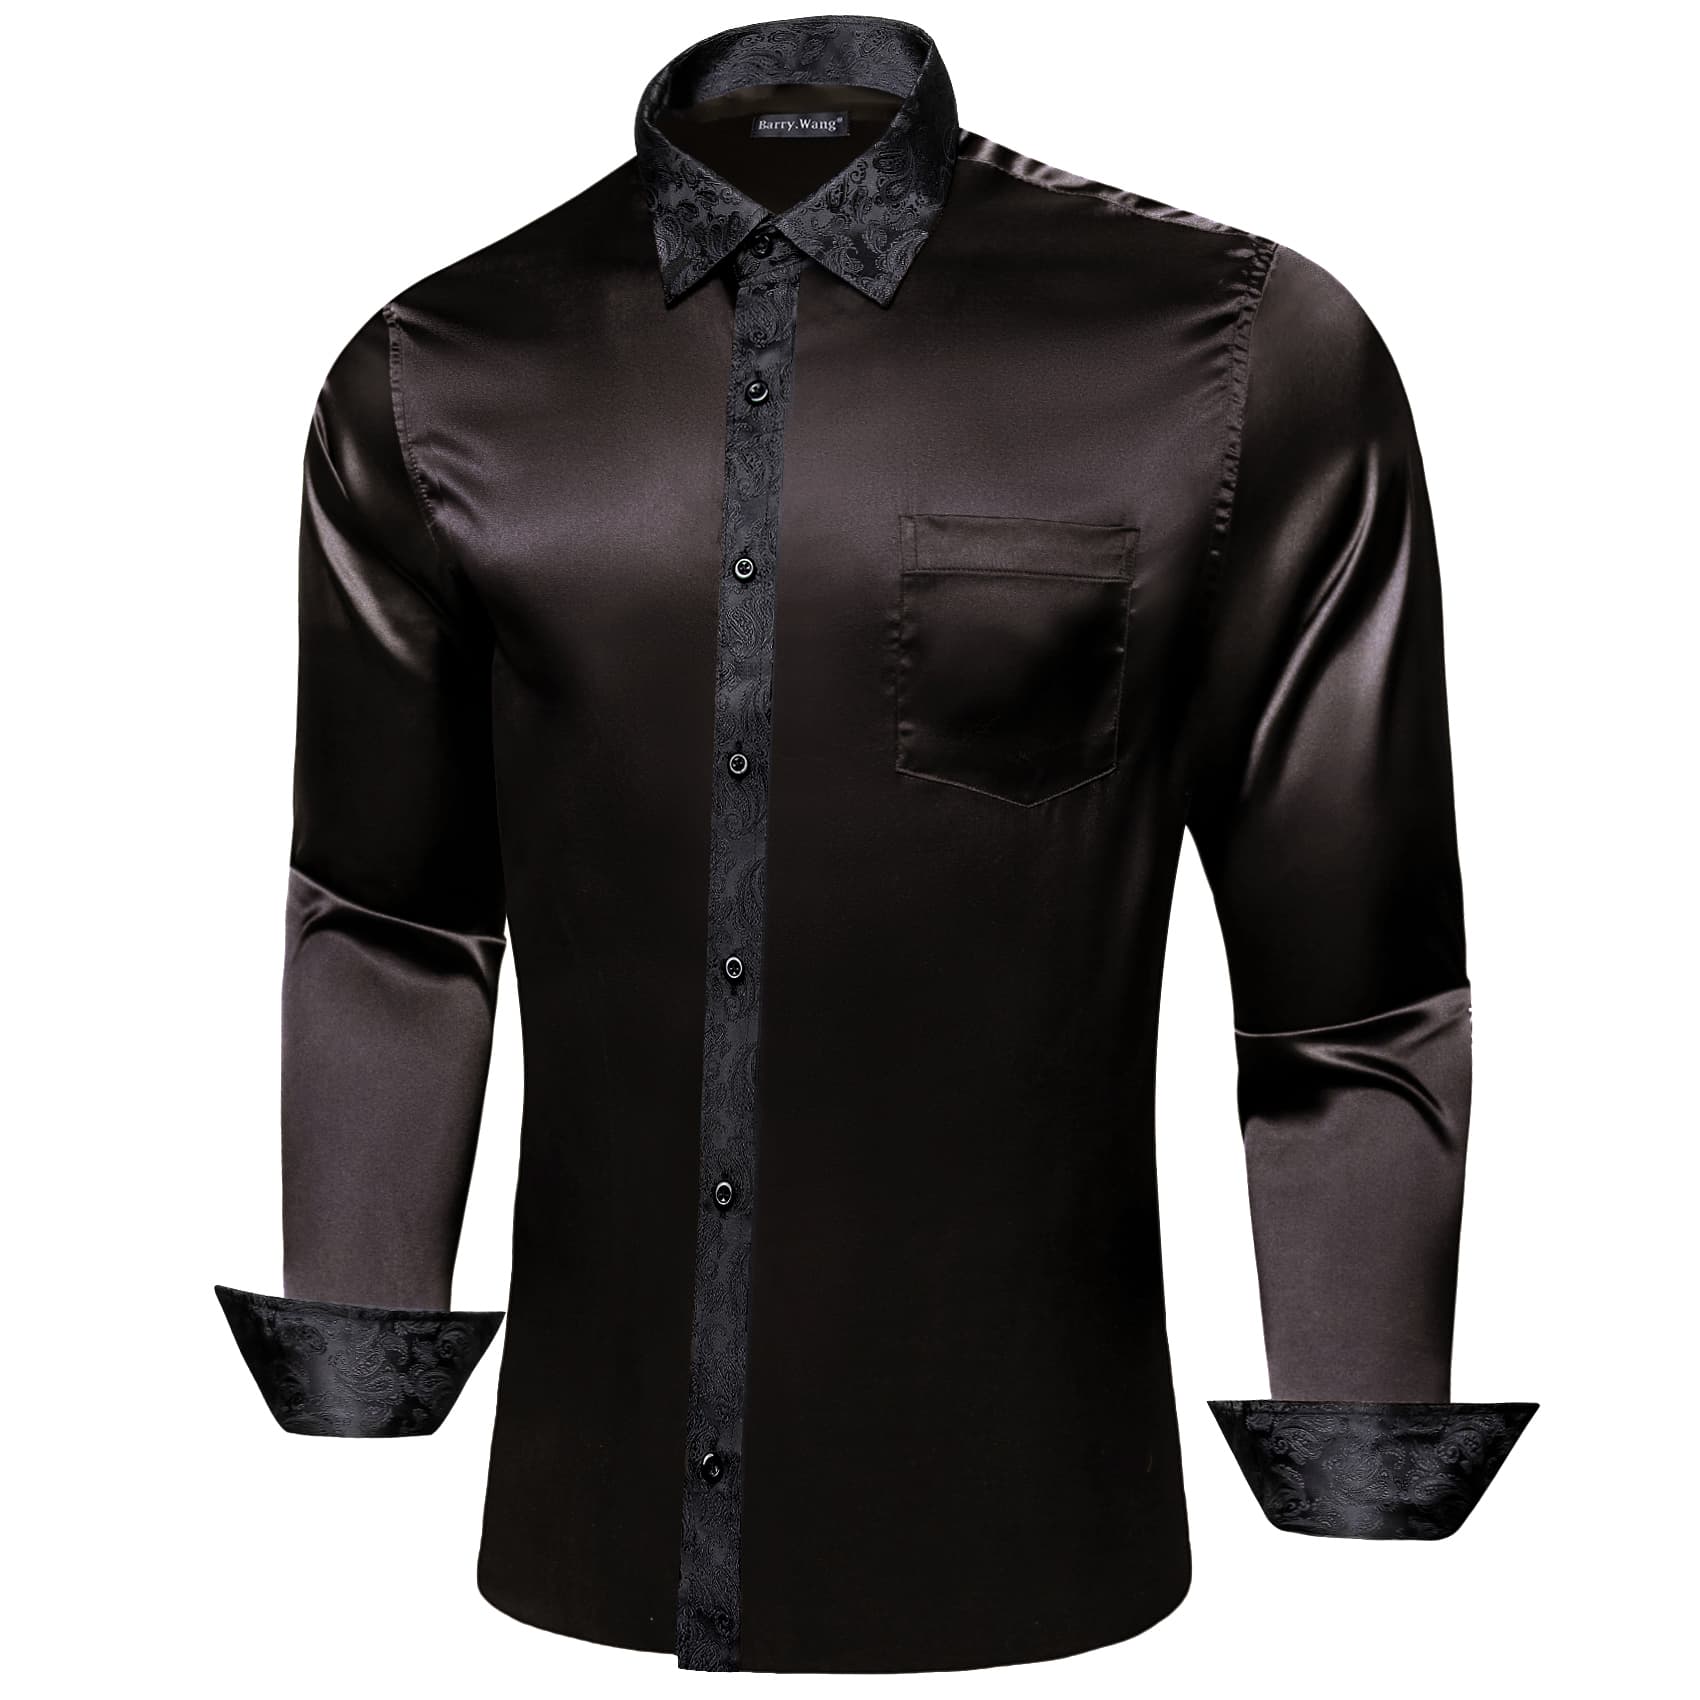 Black Shirt barry wang shirt for men 